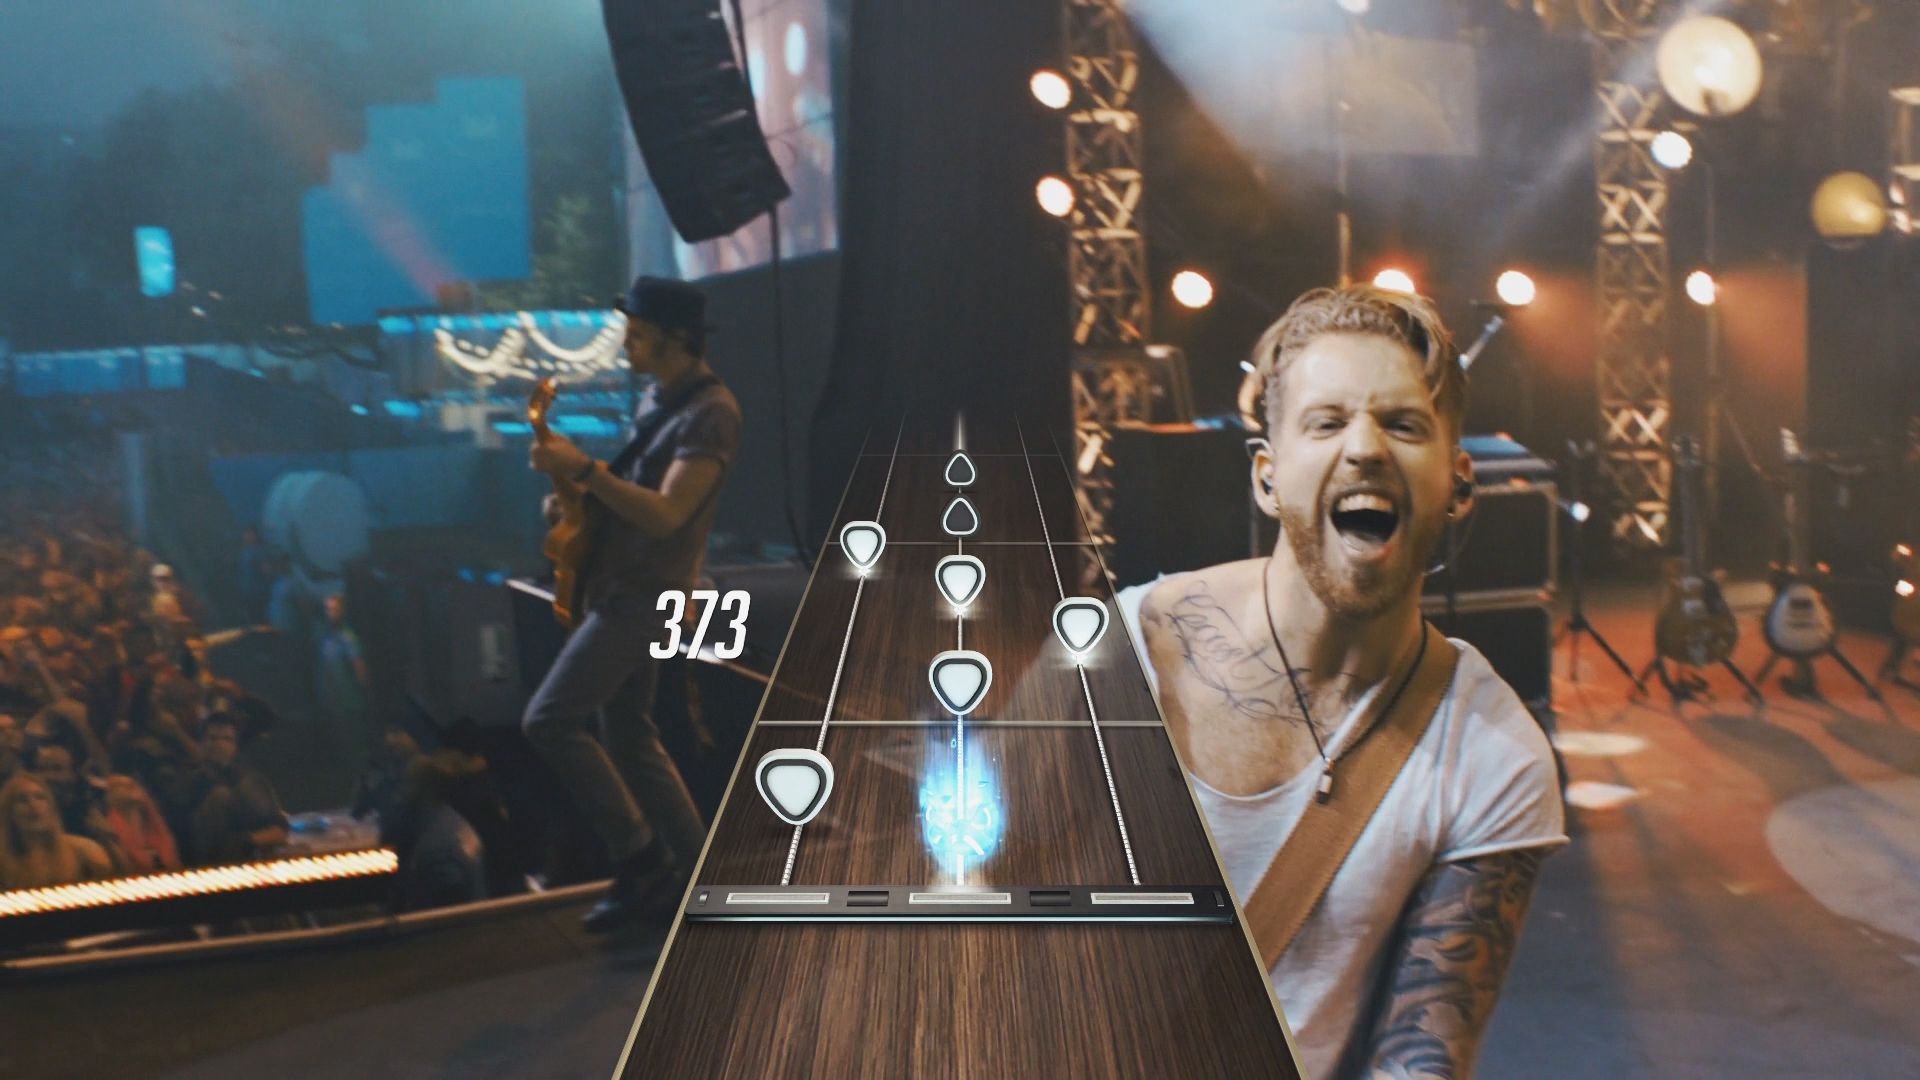 Guitar Hero Live (PS4 / PlayStation 4) Game Profile | News, Reviews